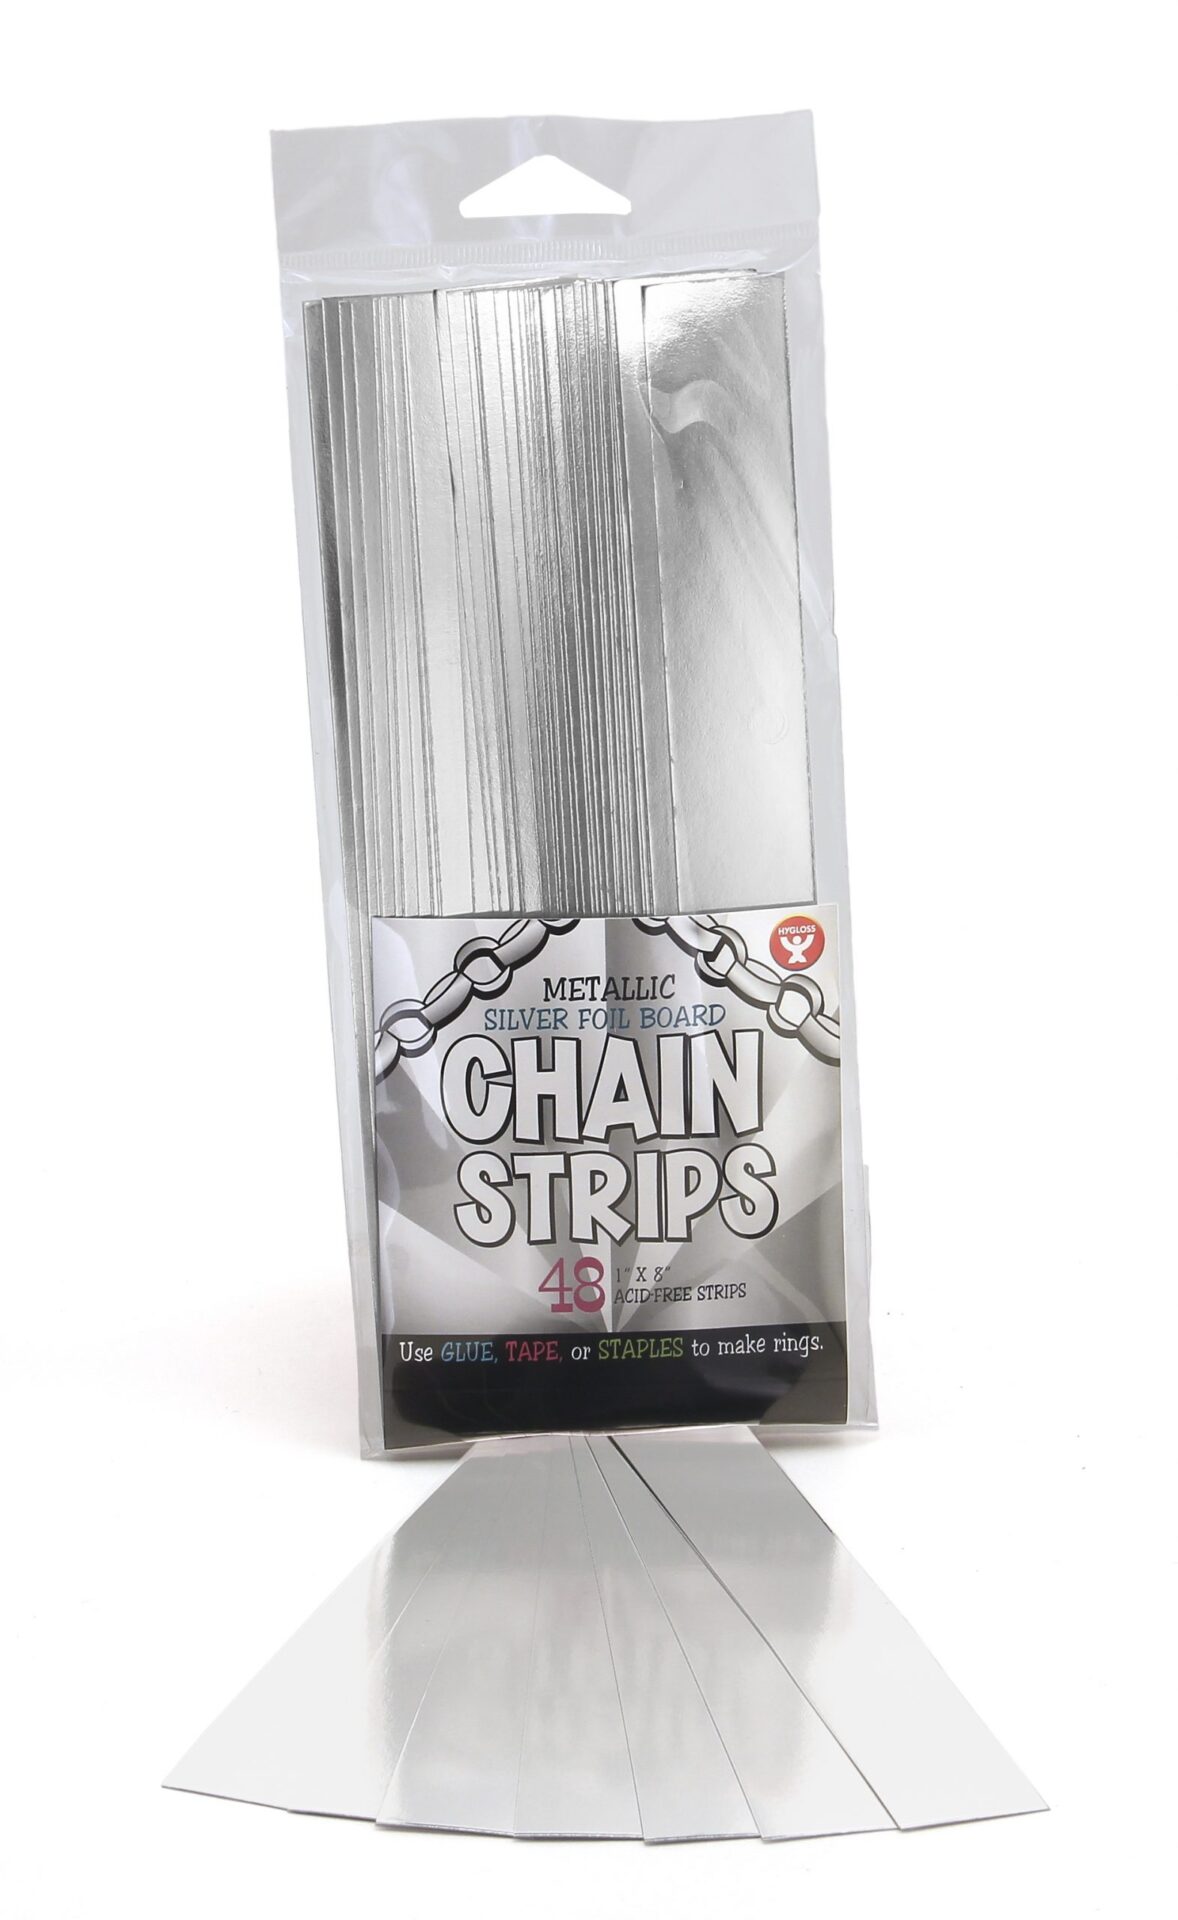 Super Strips 1"x8" - 48 Non-Gummed Metallic Silver Foil Board Chain Strips